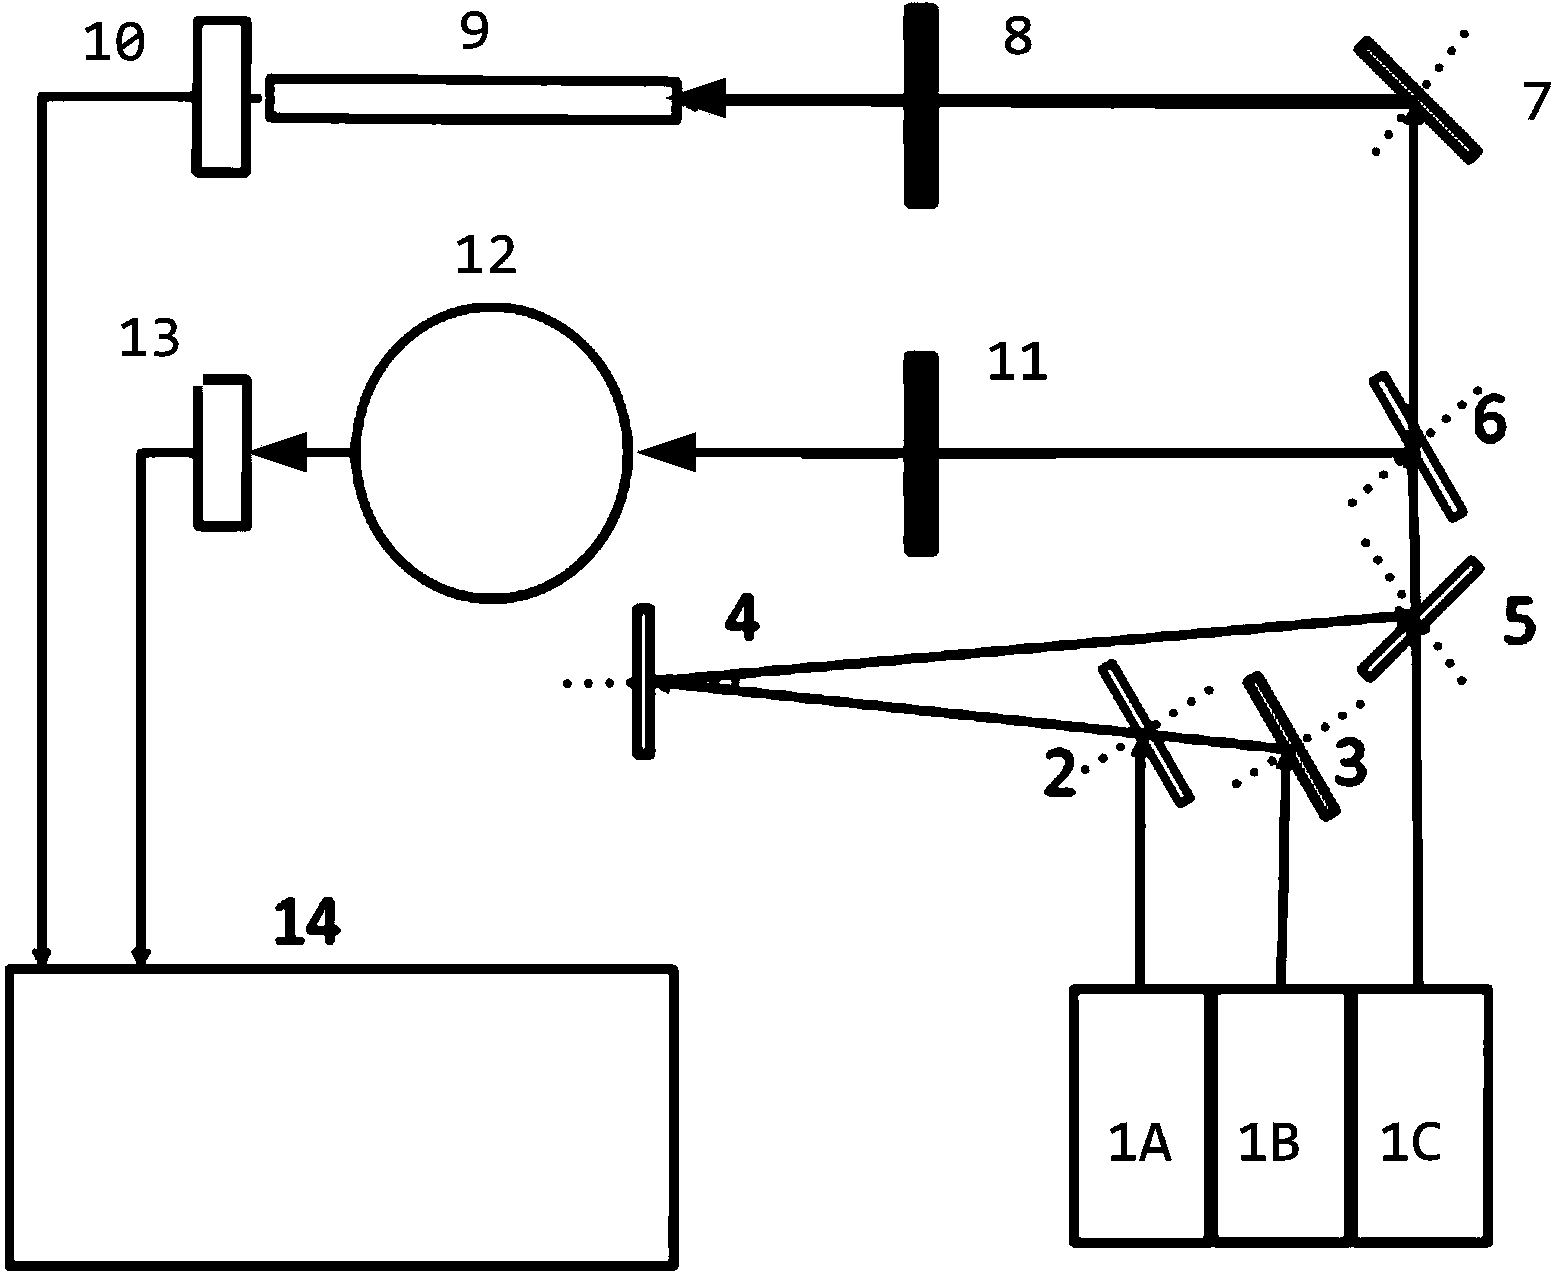 Multi-channel laser absorption spectrum measuring system